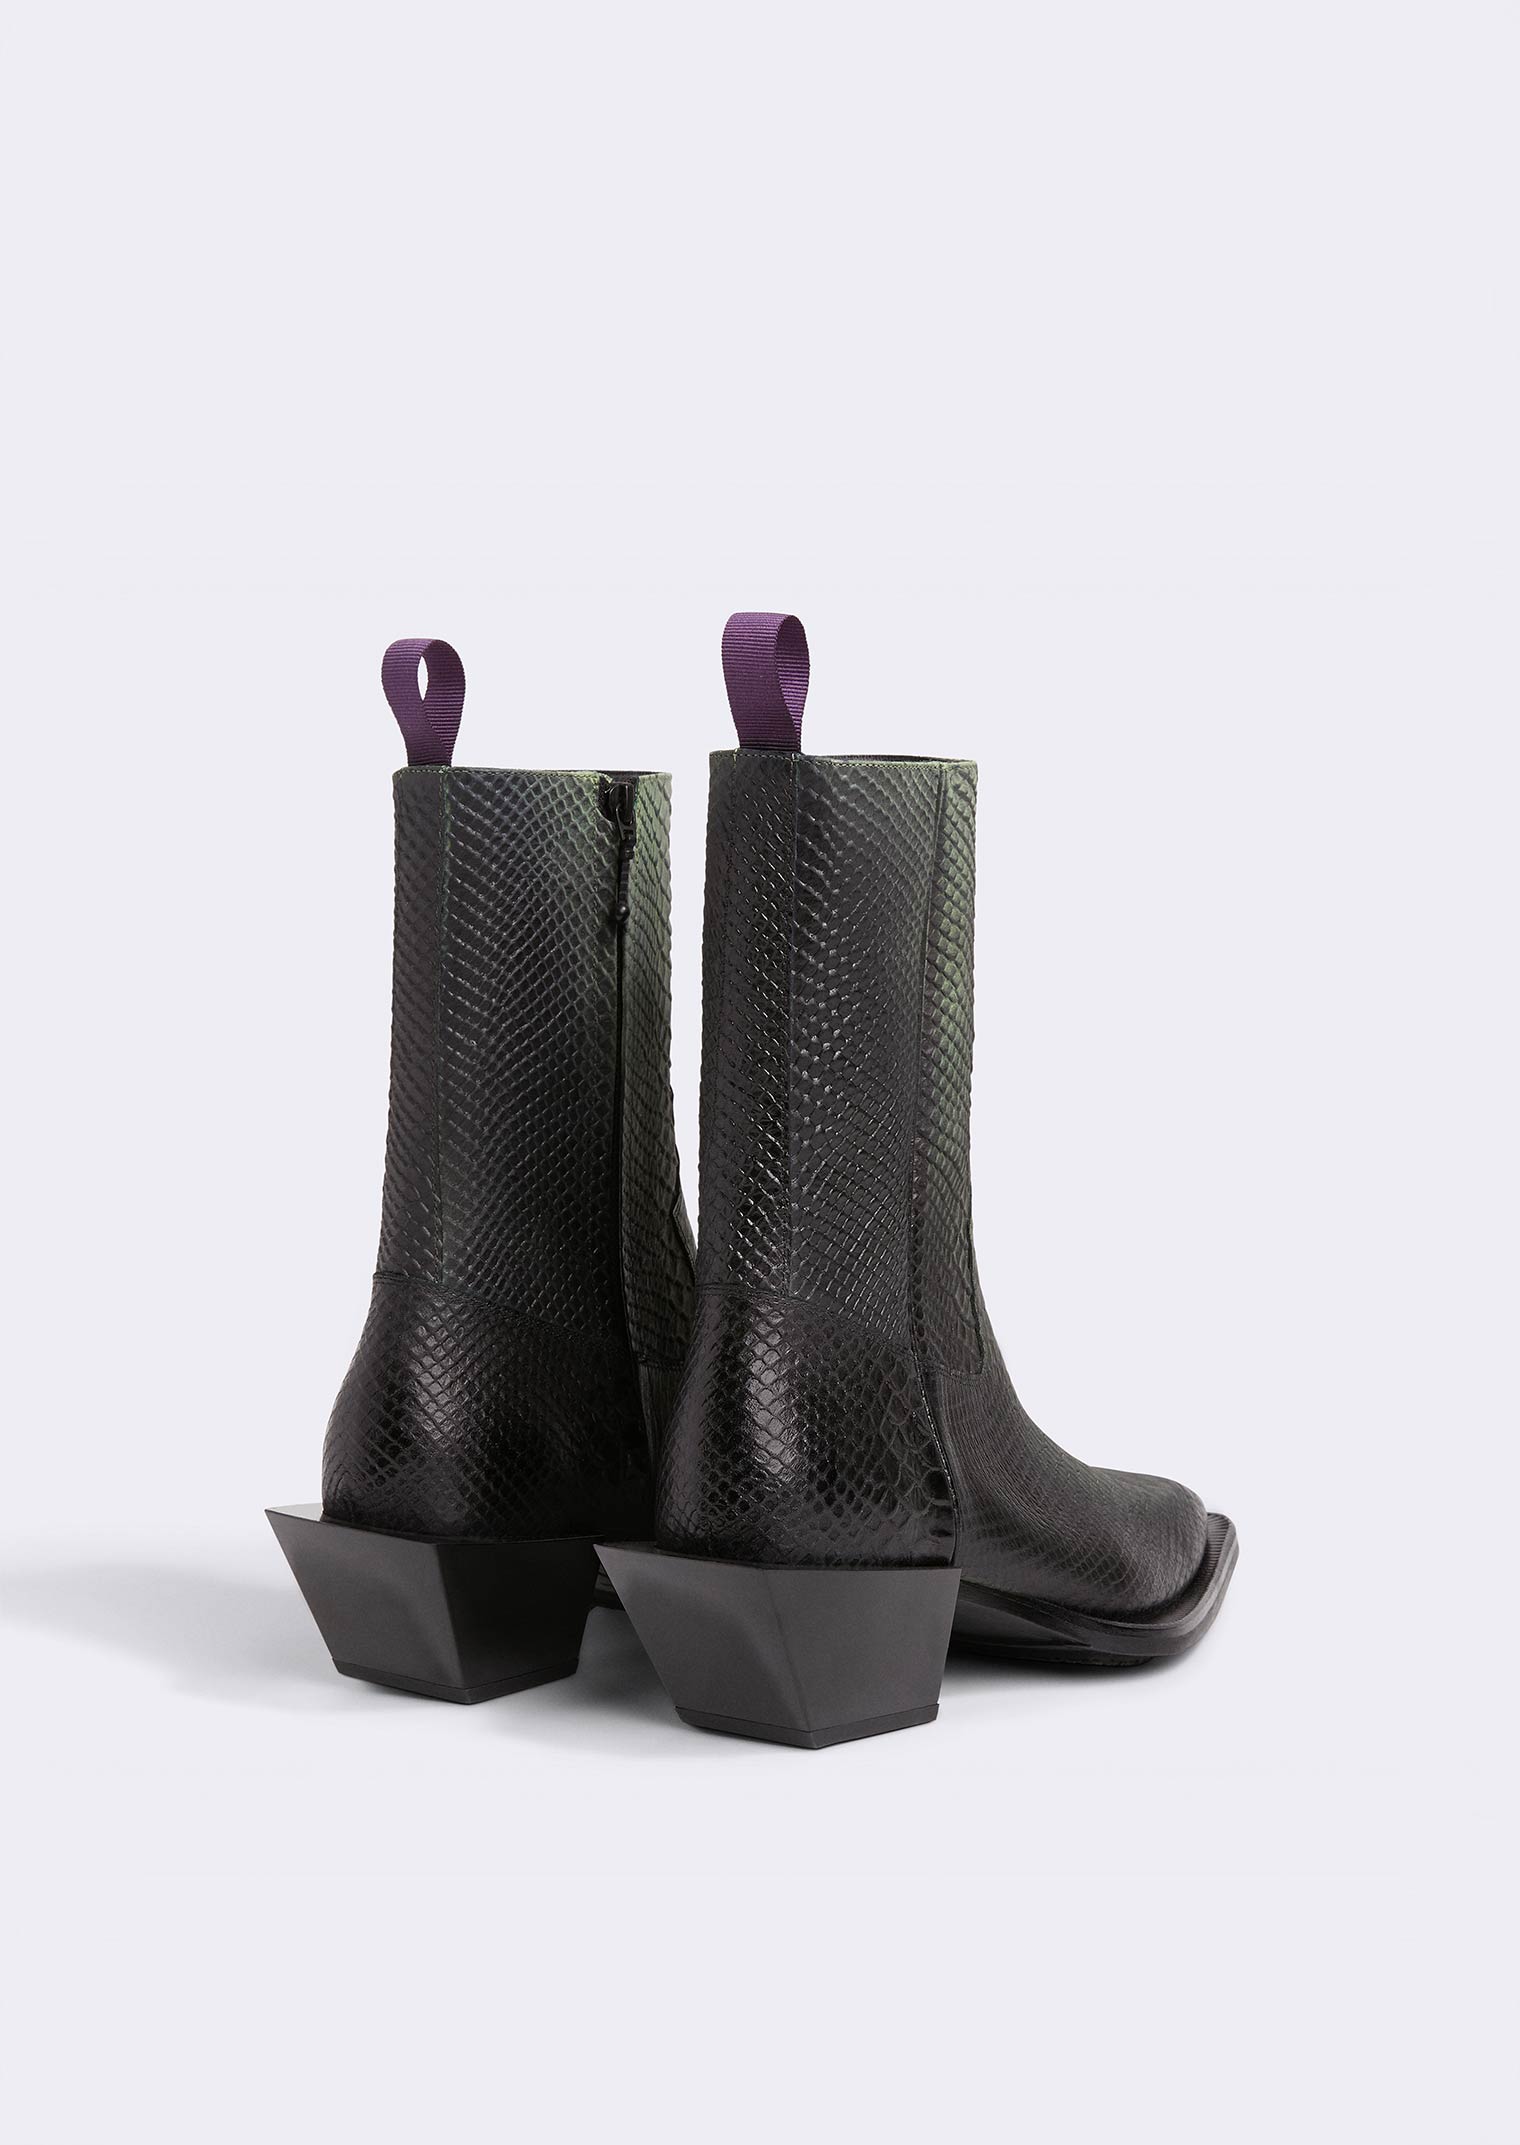 EYTYS Luciano Leather Amazon Boots | EYTYS